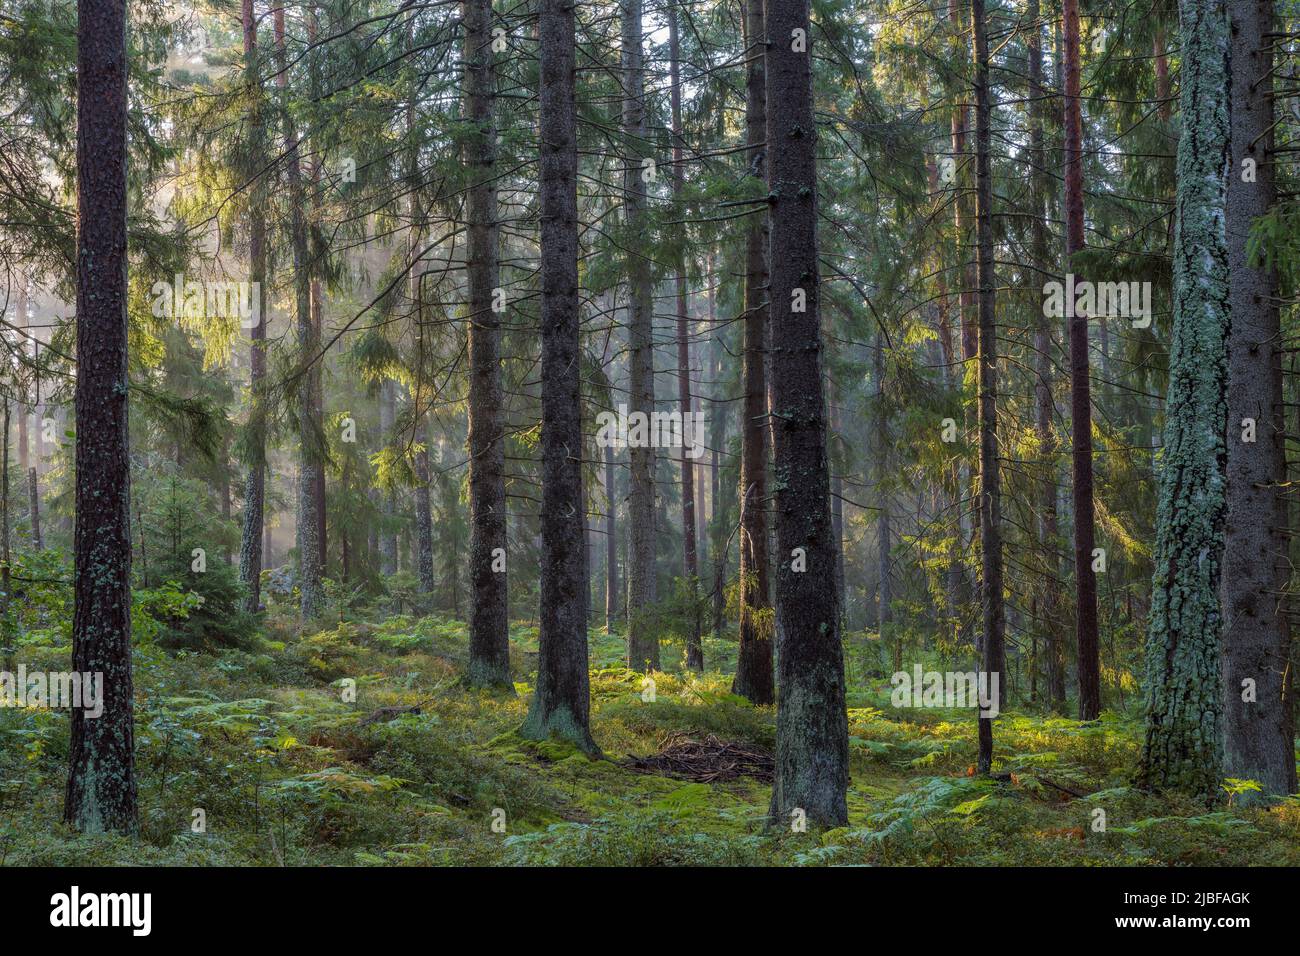 Pine forest in Lidingo, Sweden Stock Photo